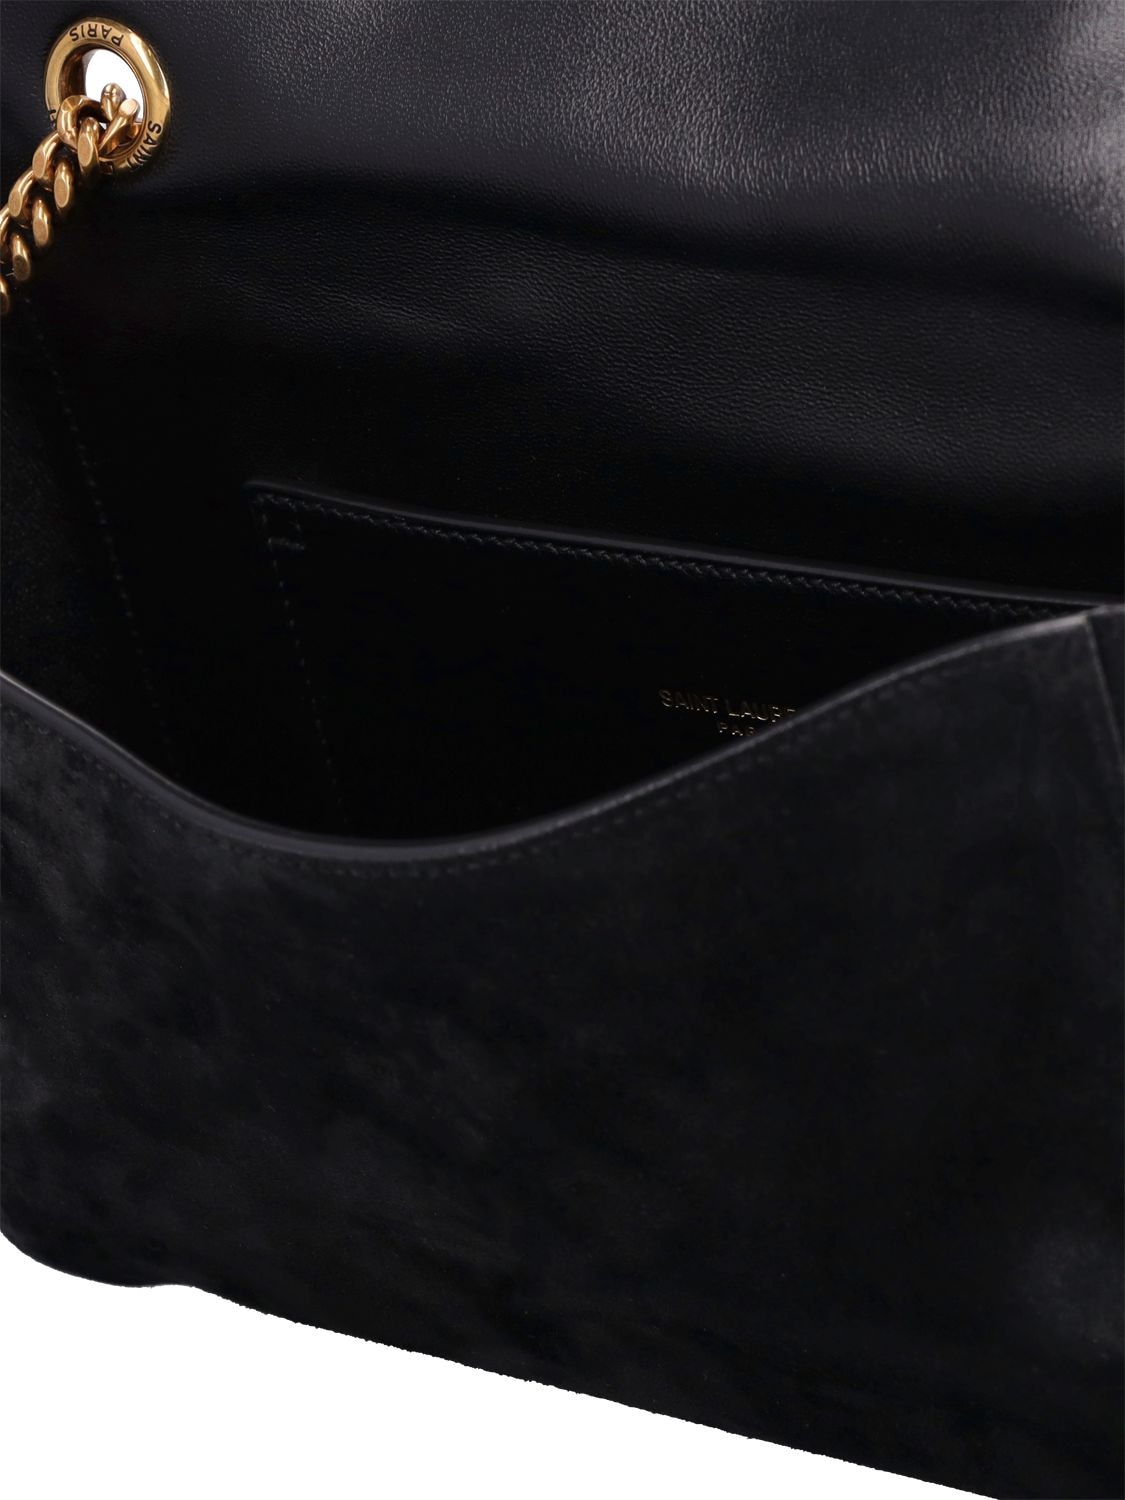 Shop Saint Laurent Small Kate Reversible Chain Bag In Black